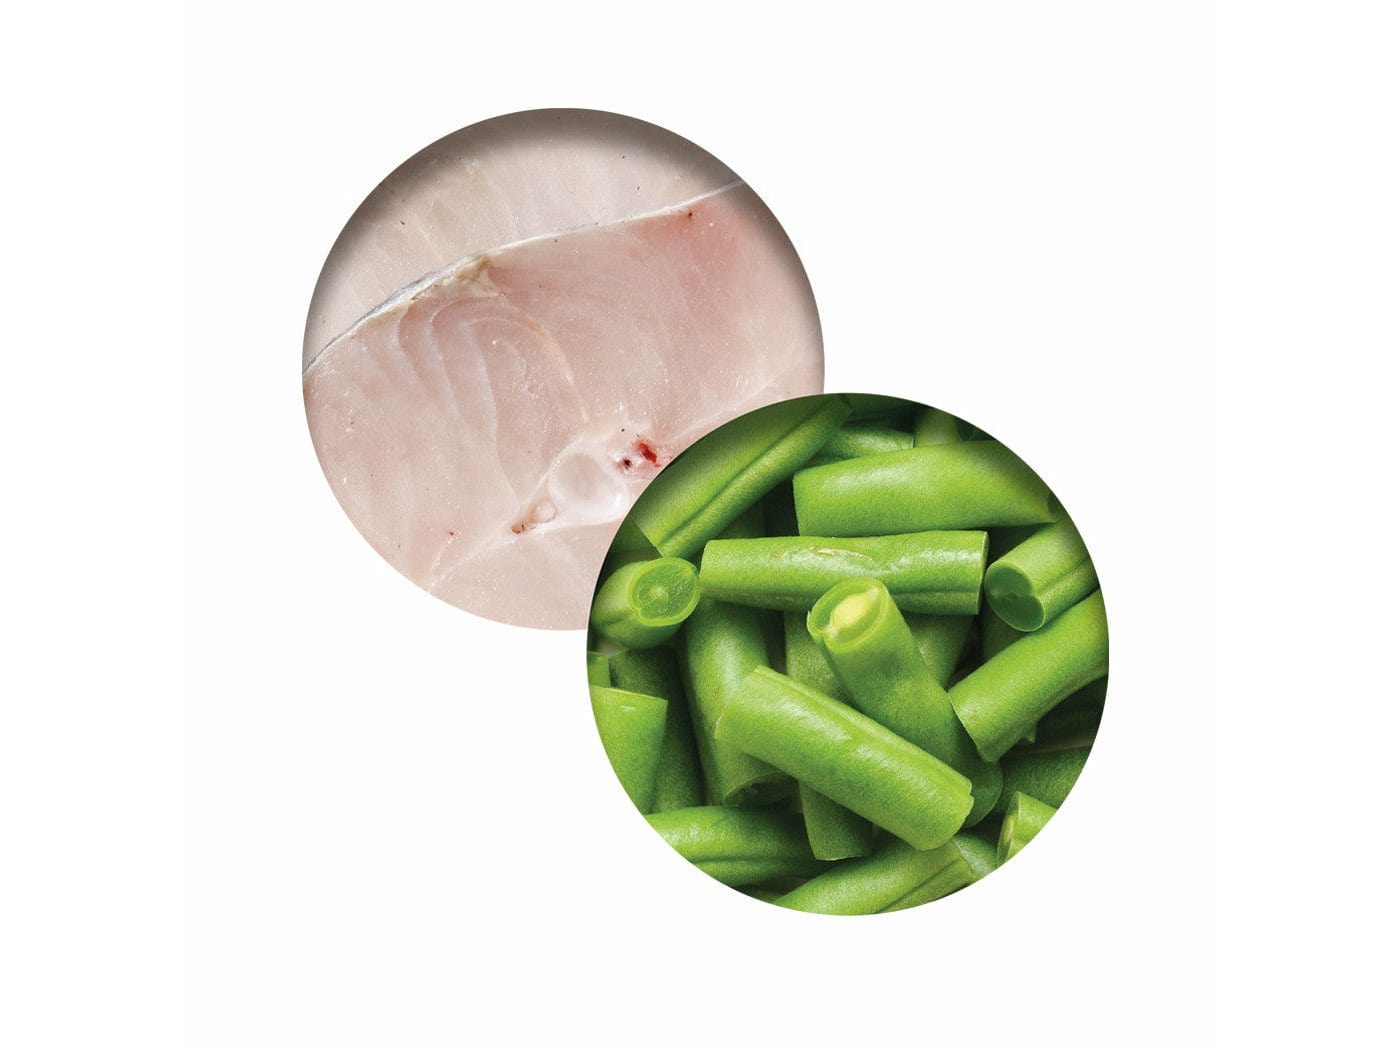 Catit Chicken Dinner, Tilapia & Green Beans 80 g, 6pcs/box